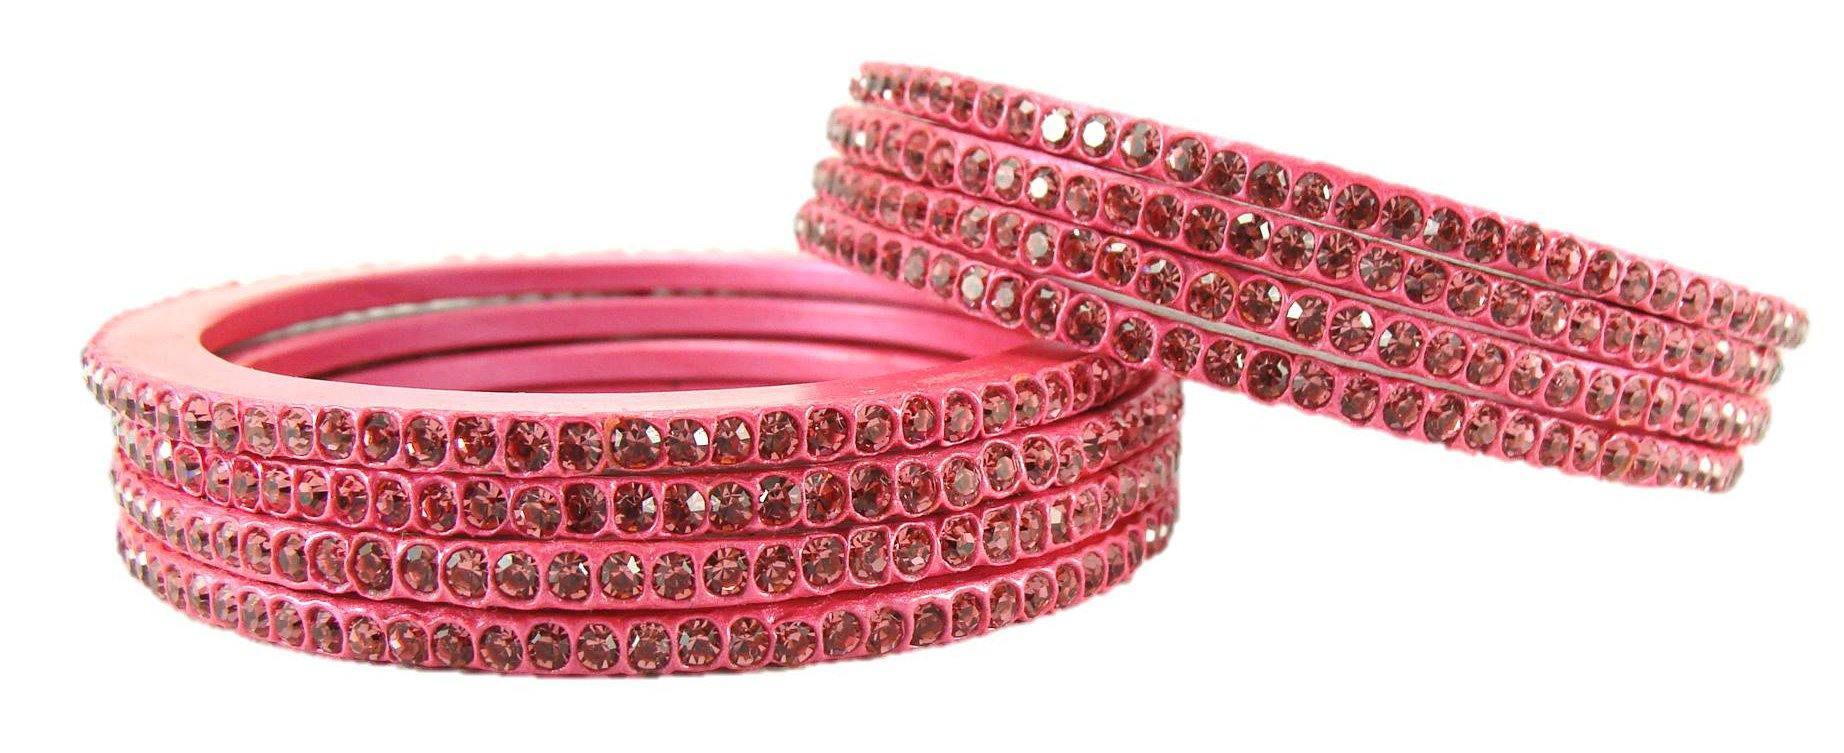 sukriti rajasthani traditional pink lac bangles for women - set of 8